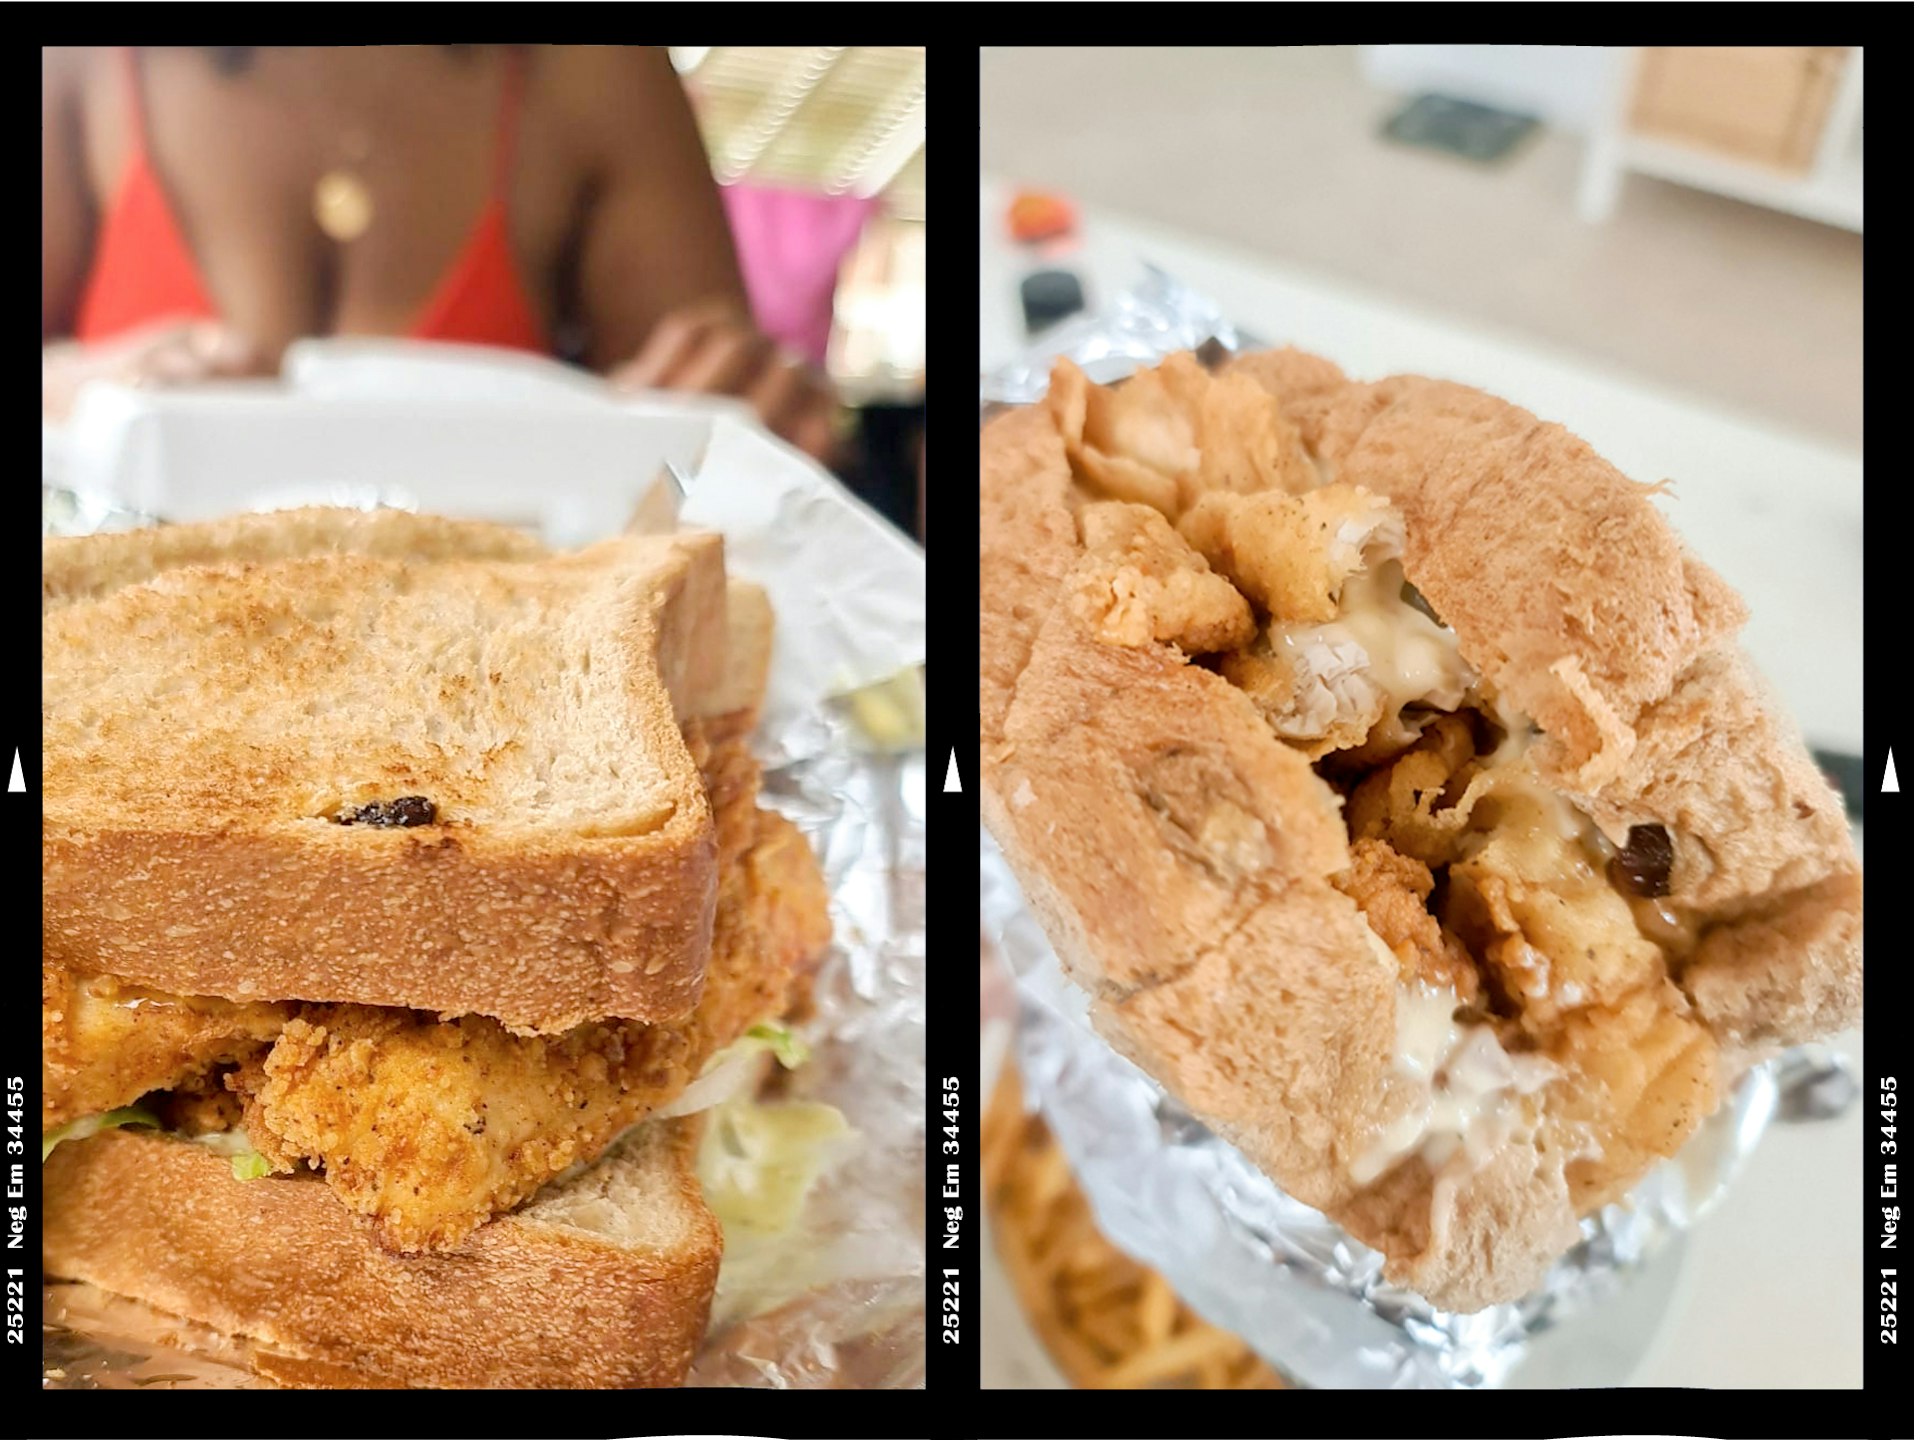 Bermuda fried fish sandwich